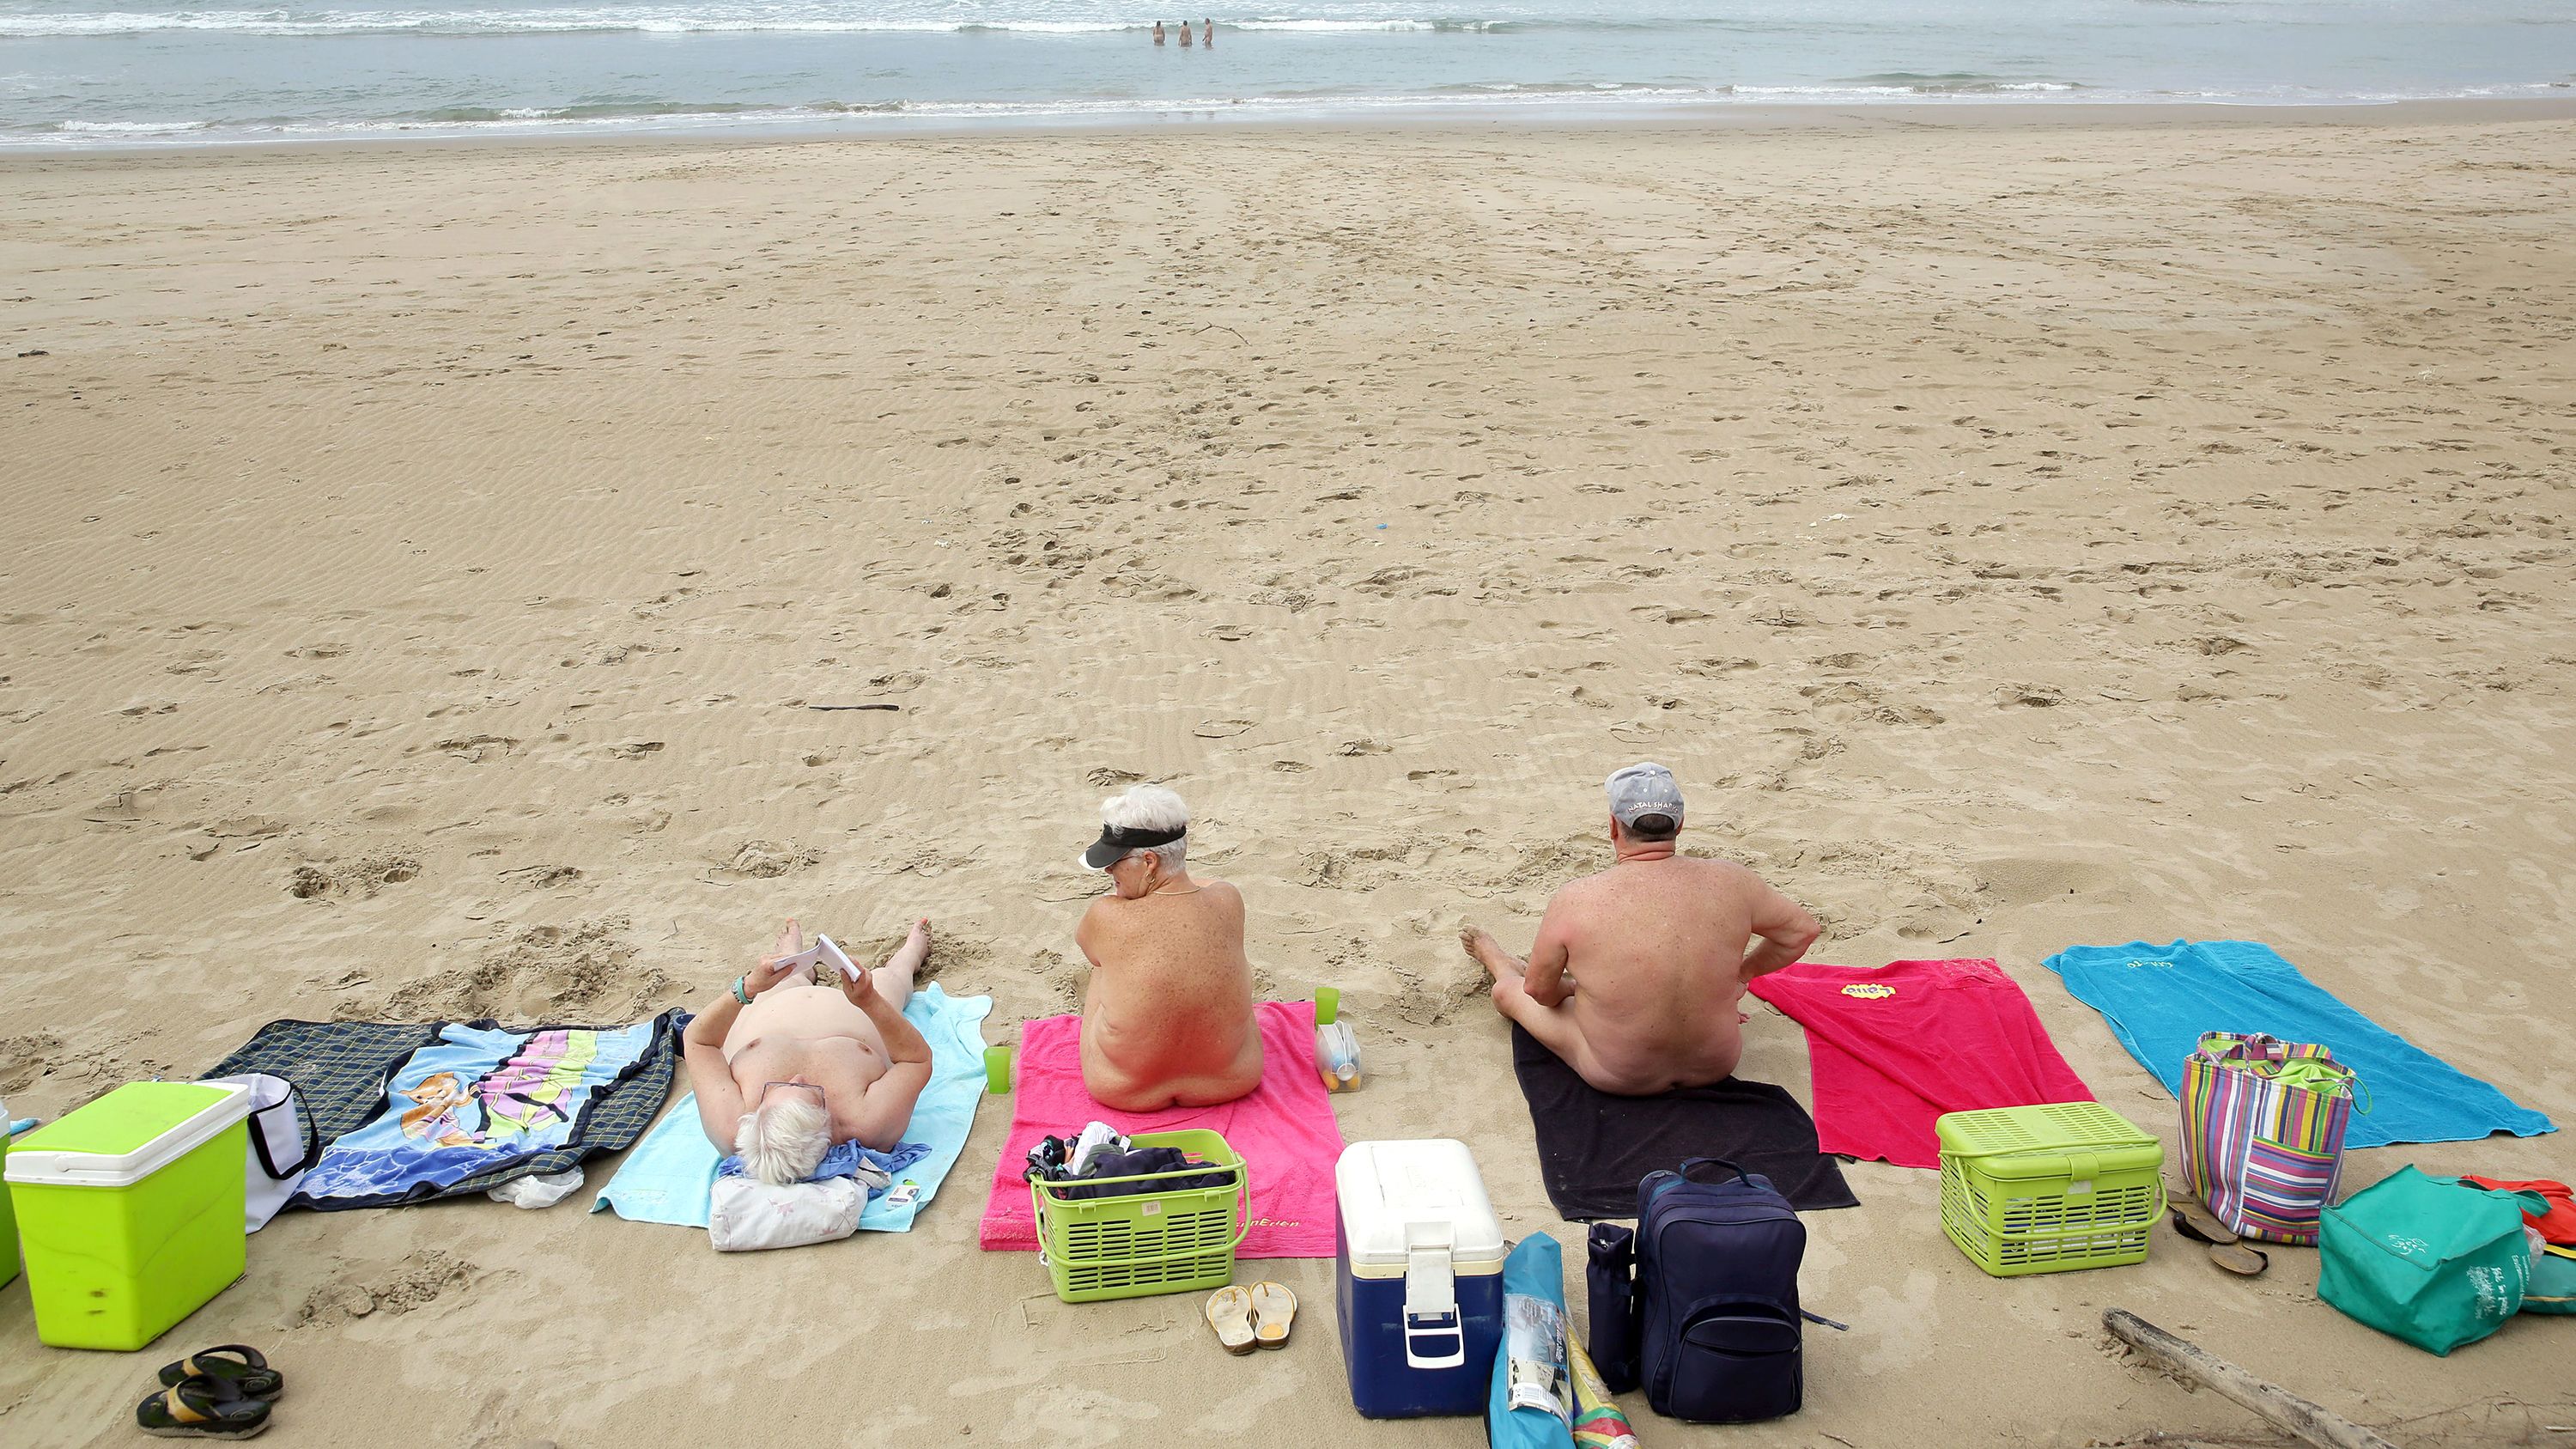 Camp Nudist Gallery - 15 best nude beaches around the world | CNN